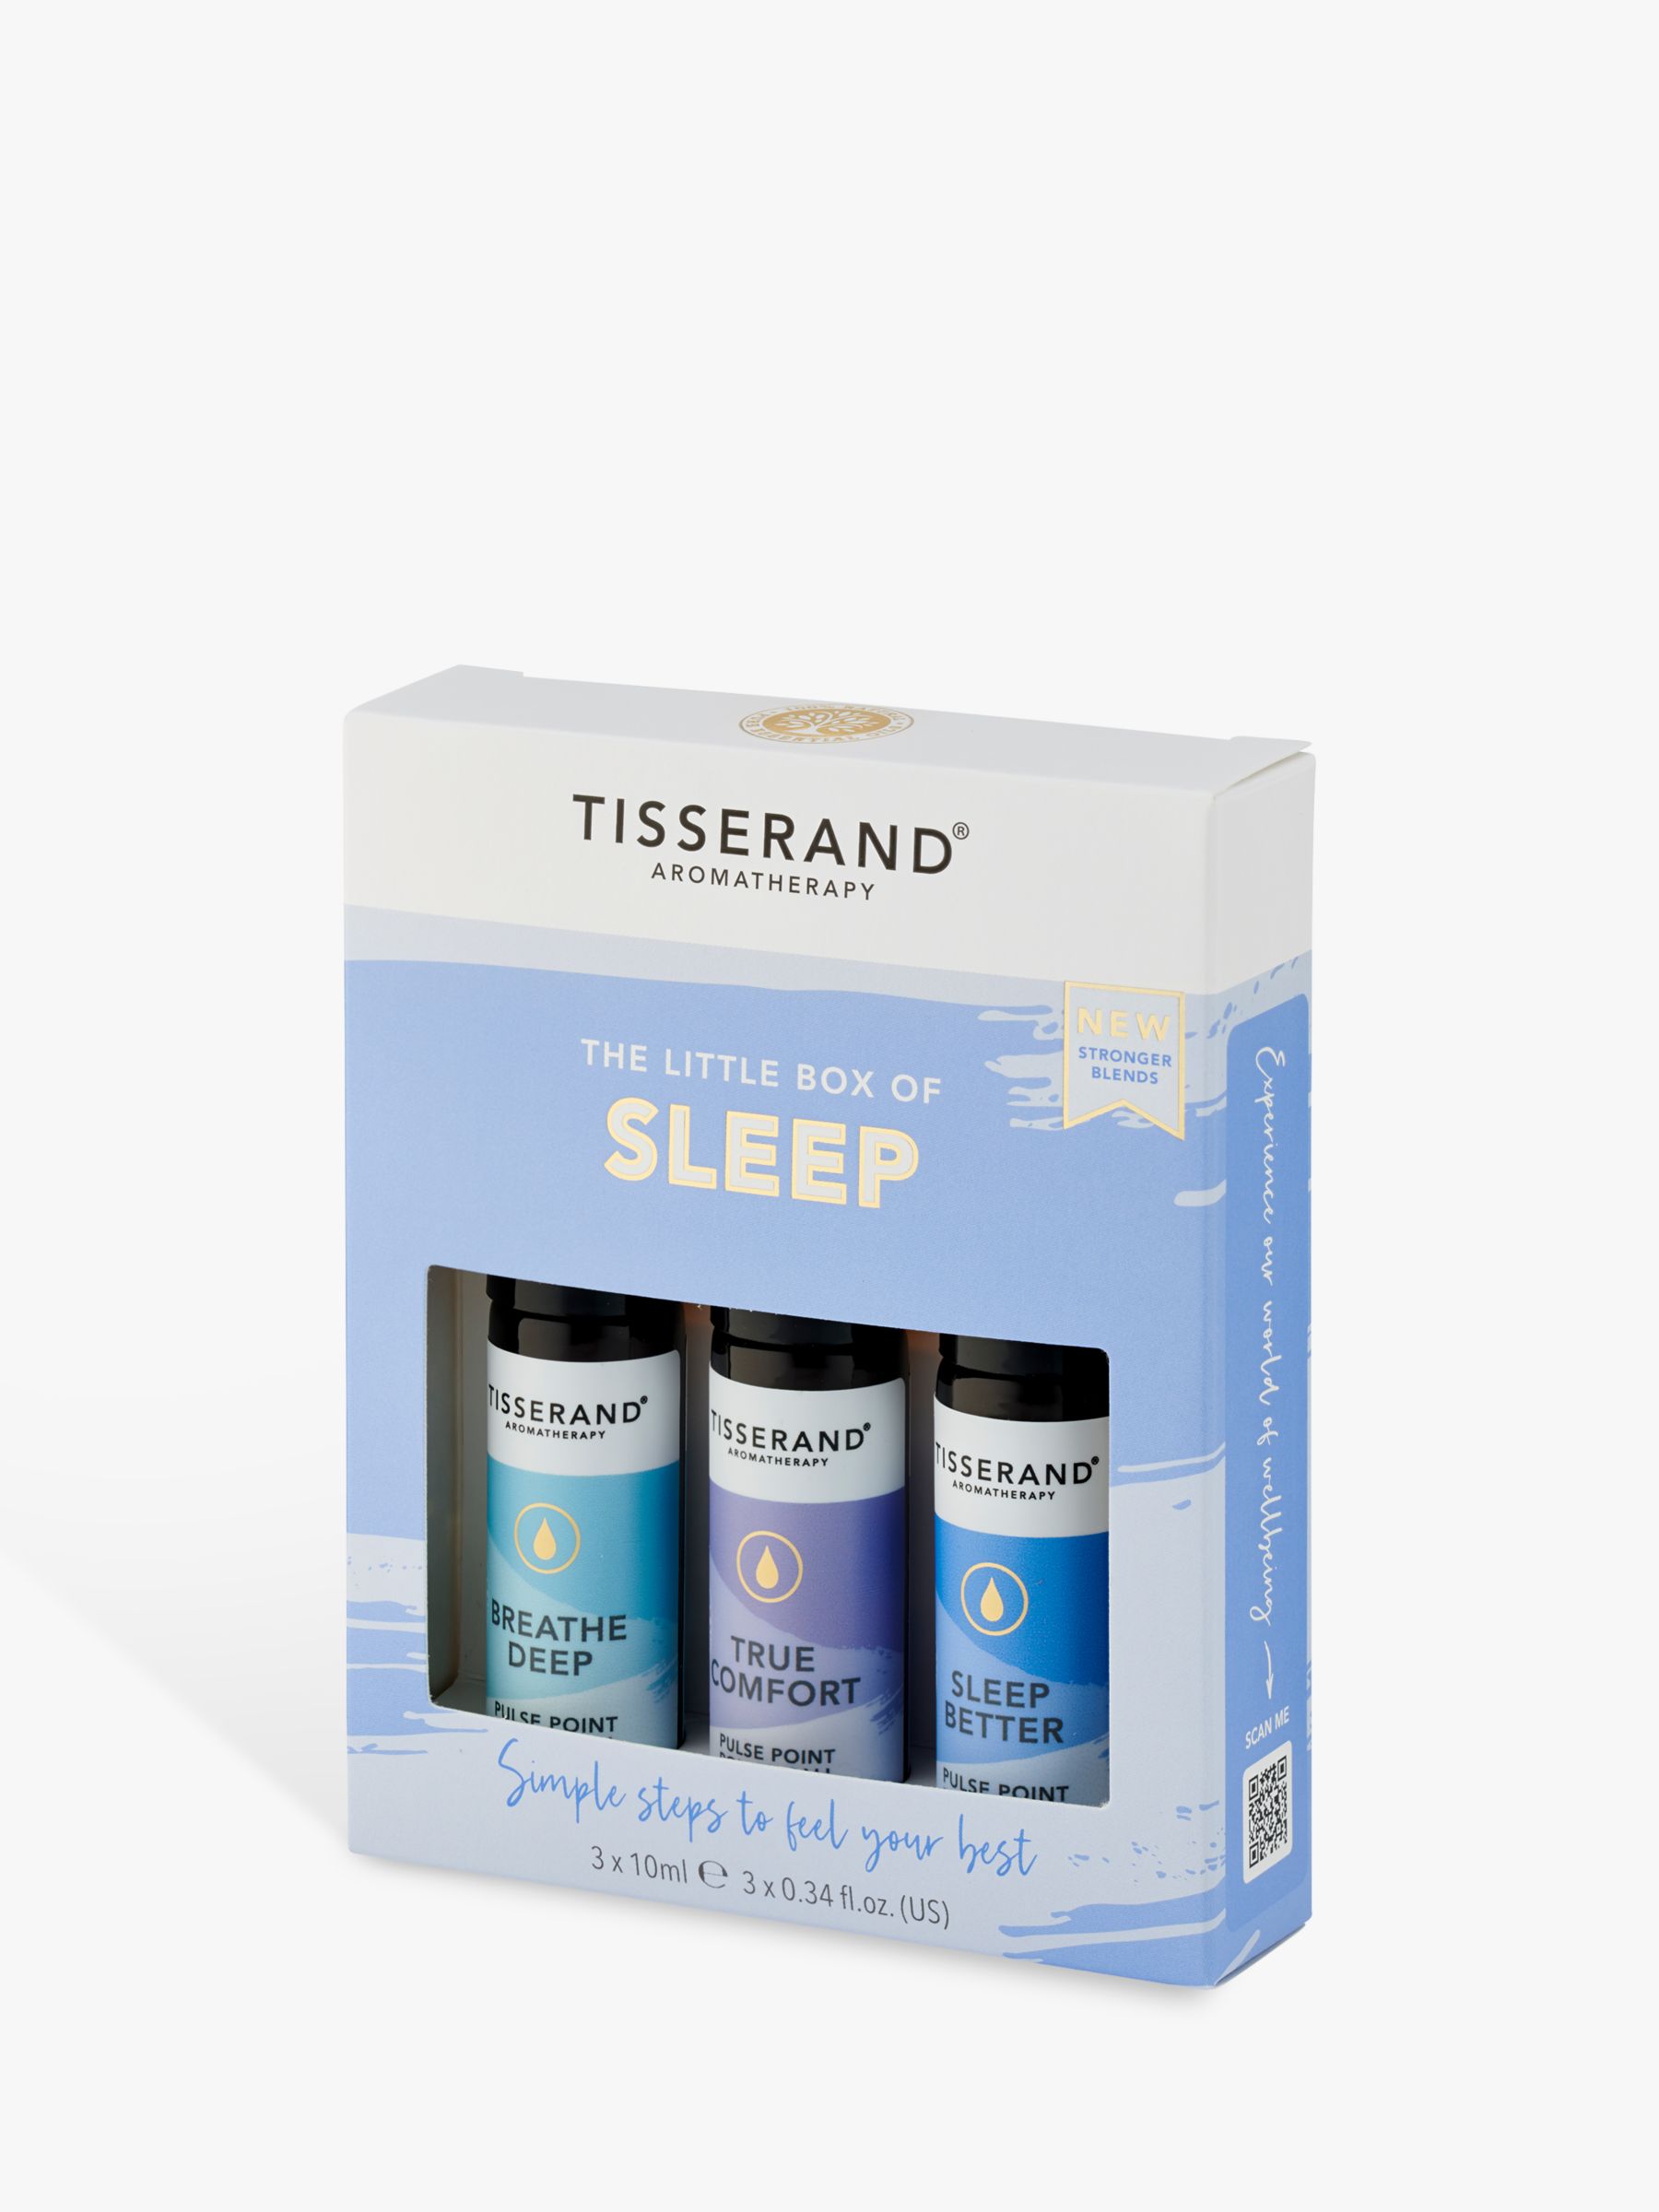 Tisserand Aromatherapy The Little Box of Sleep Bodycare Gift Set 6